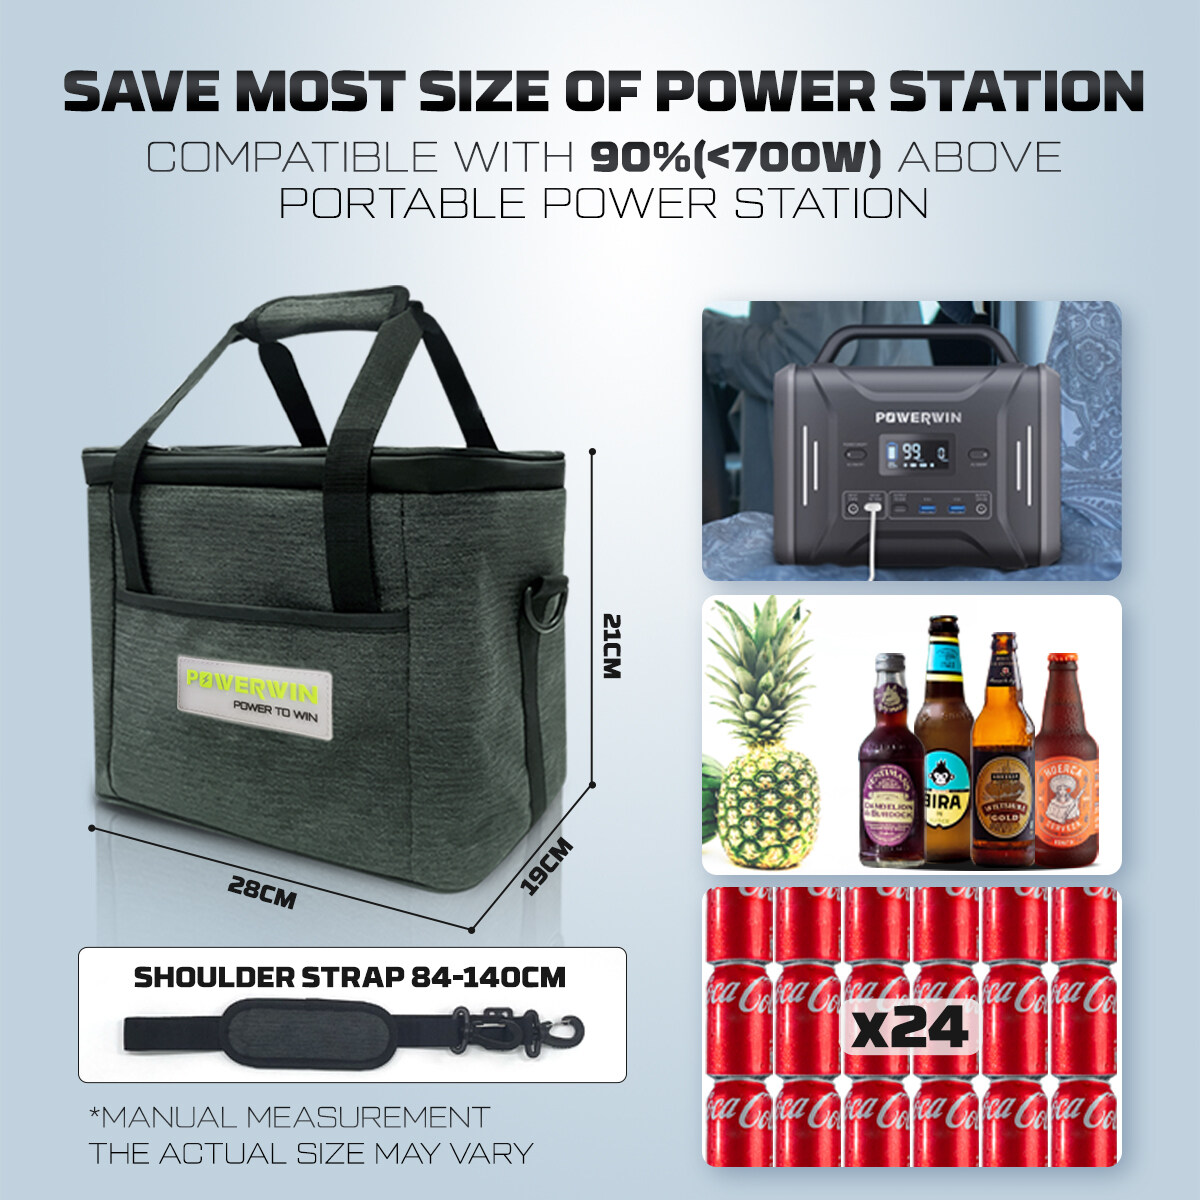 POWERWIN Carrying Case Bag, POWERWIN bag and battery